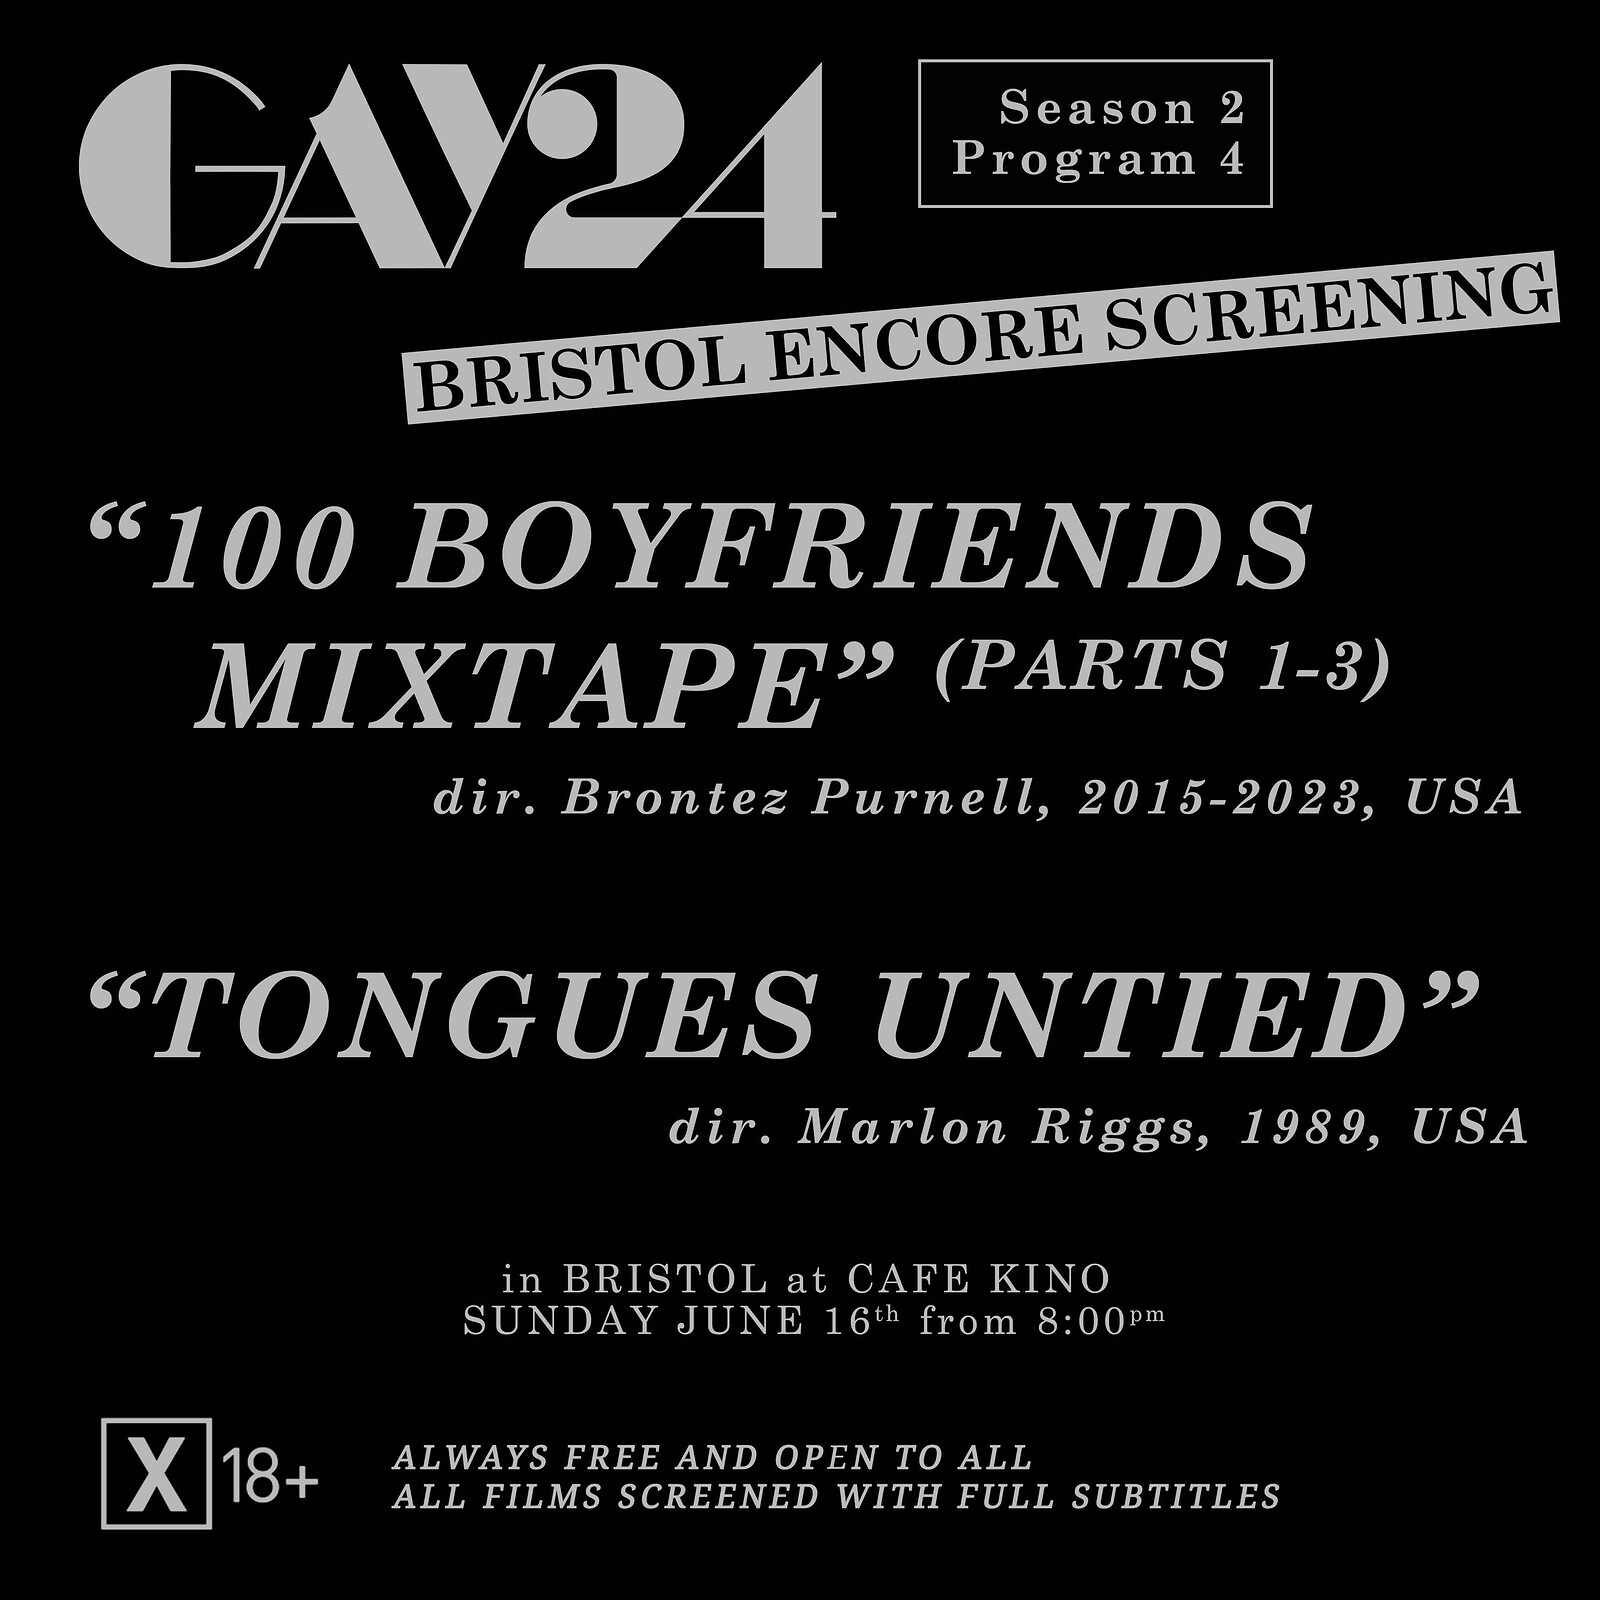 GAY24: 100 Boyfriends Mixtape + Tongues Untied at Cafe Kino